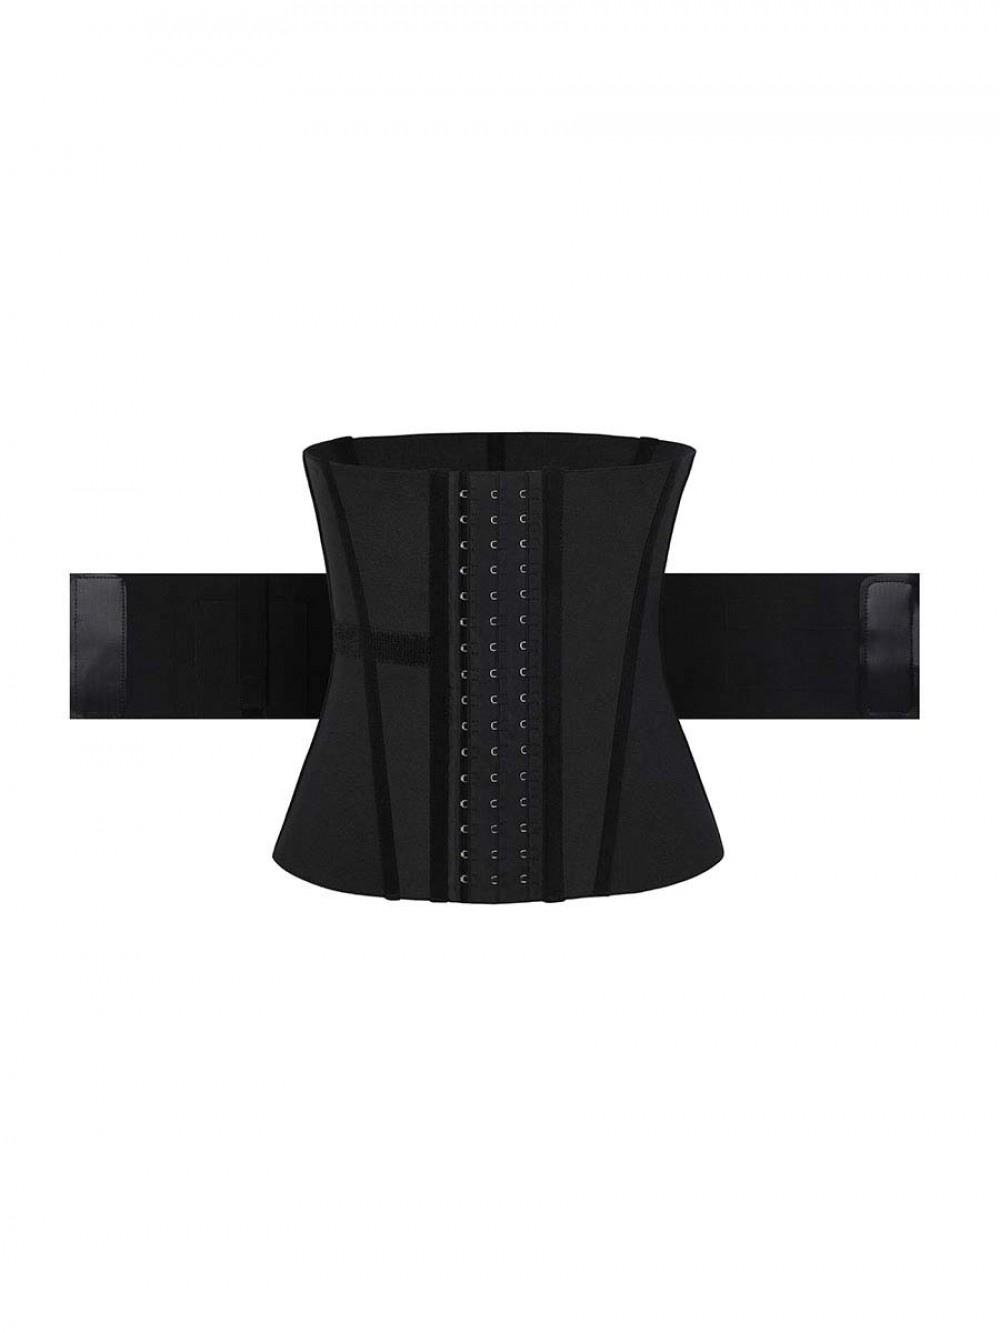 New Design Elasticity Knit Adjust Hooks Tummy Trimmer Waist Trainer Belt